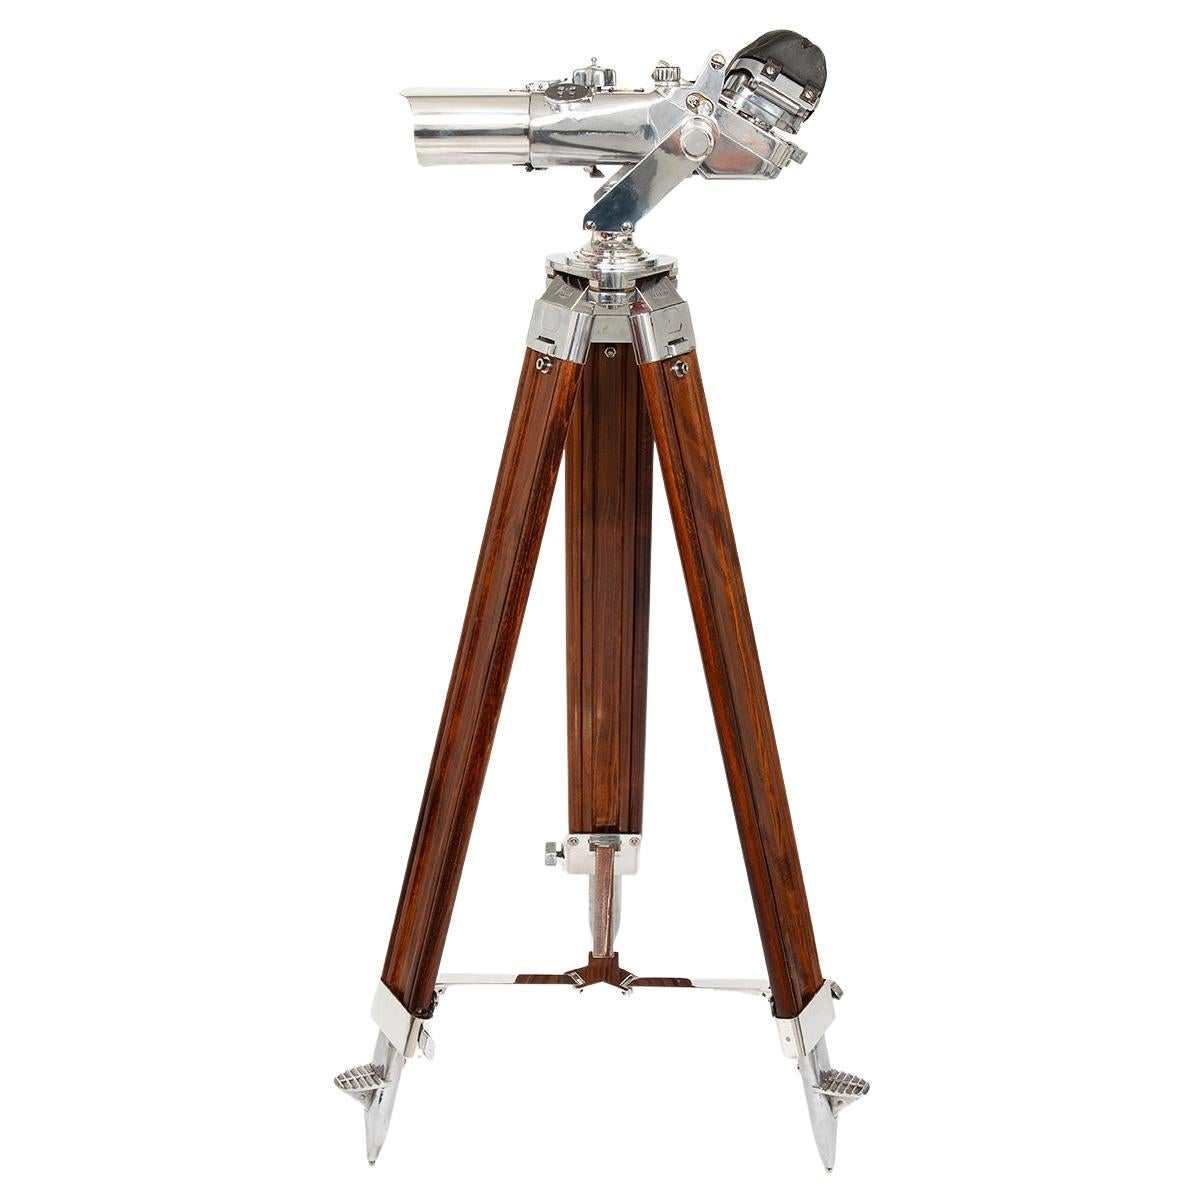 Zeiss German World War 2 Binoculars, Historical Object, Super Providence